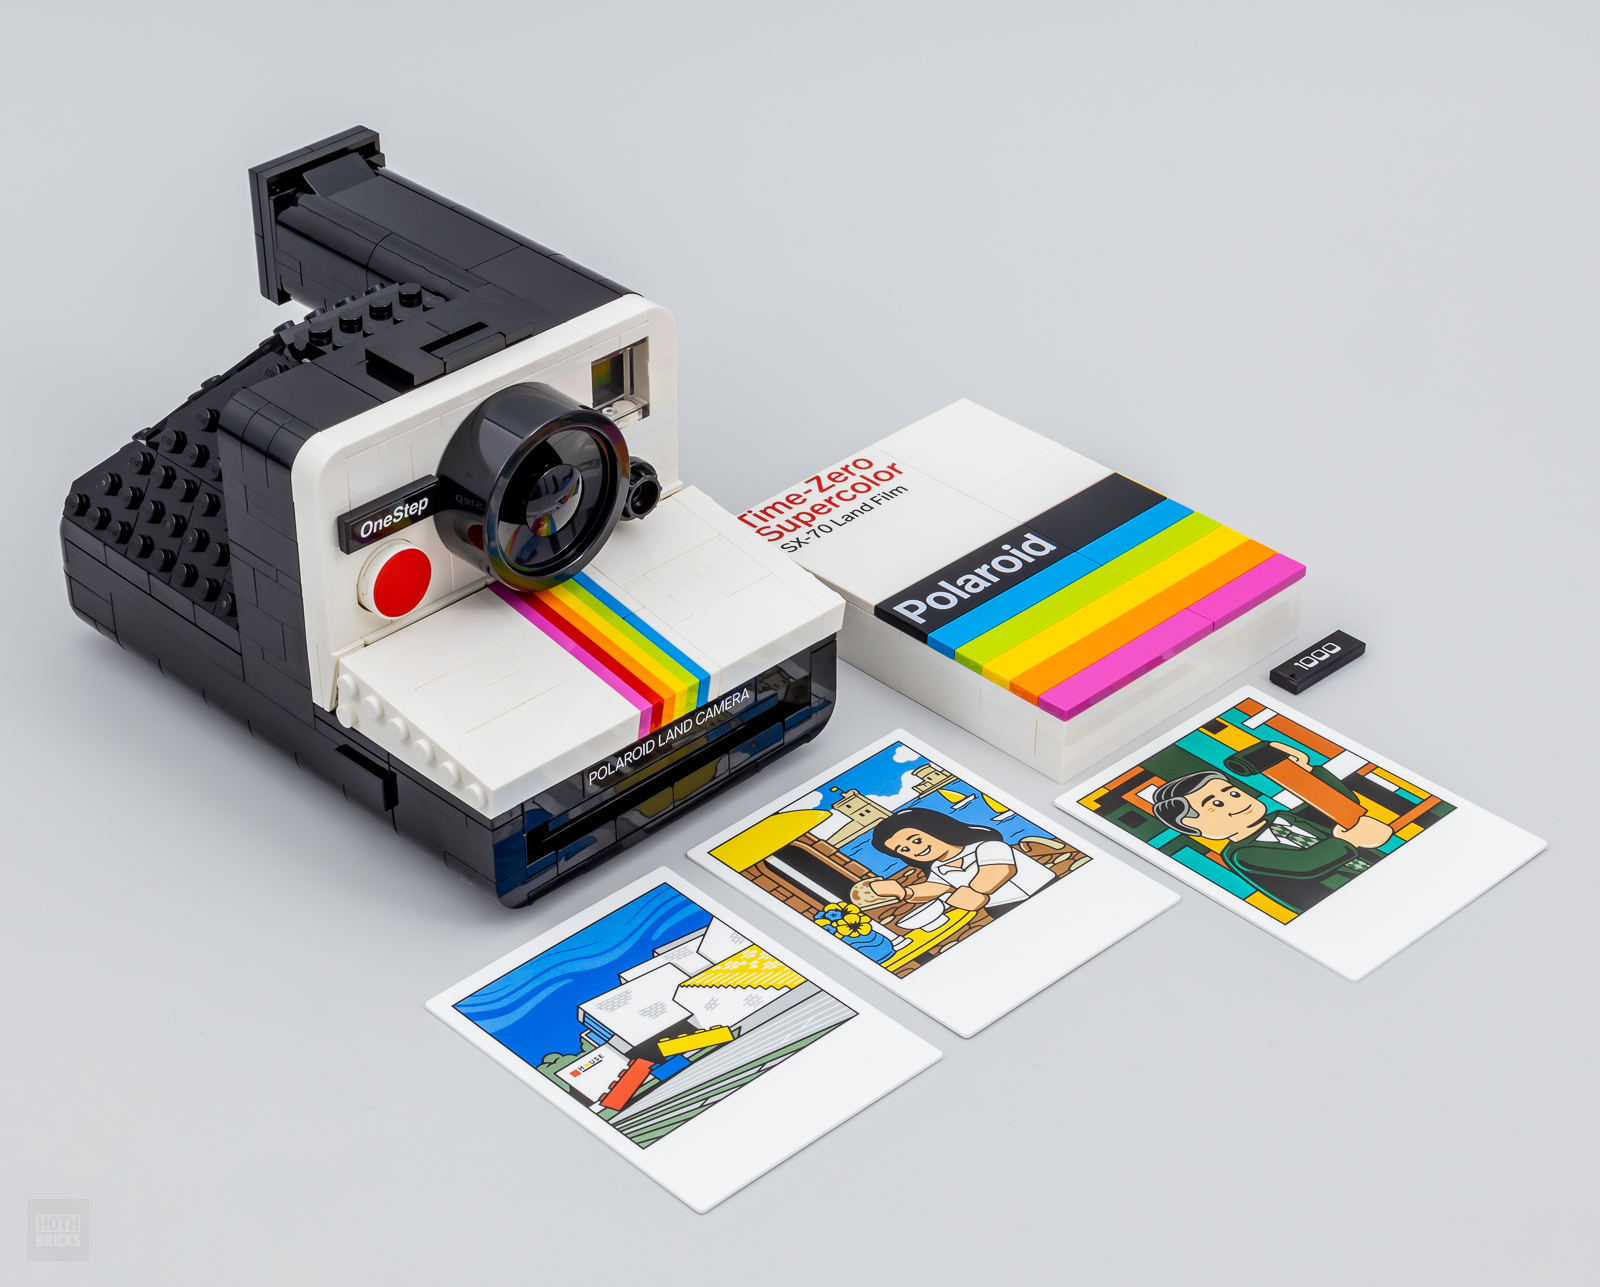 Polaroid Snap: fascino retrò ma poca convenienza